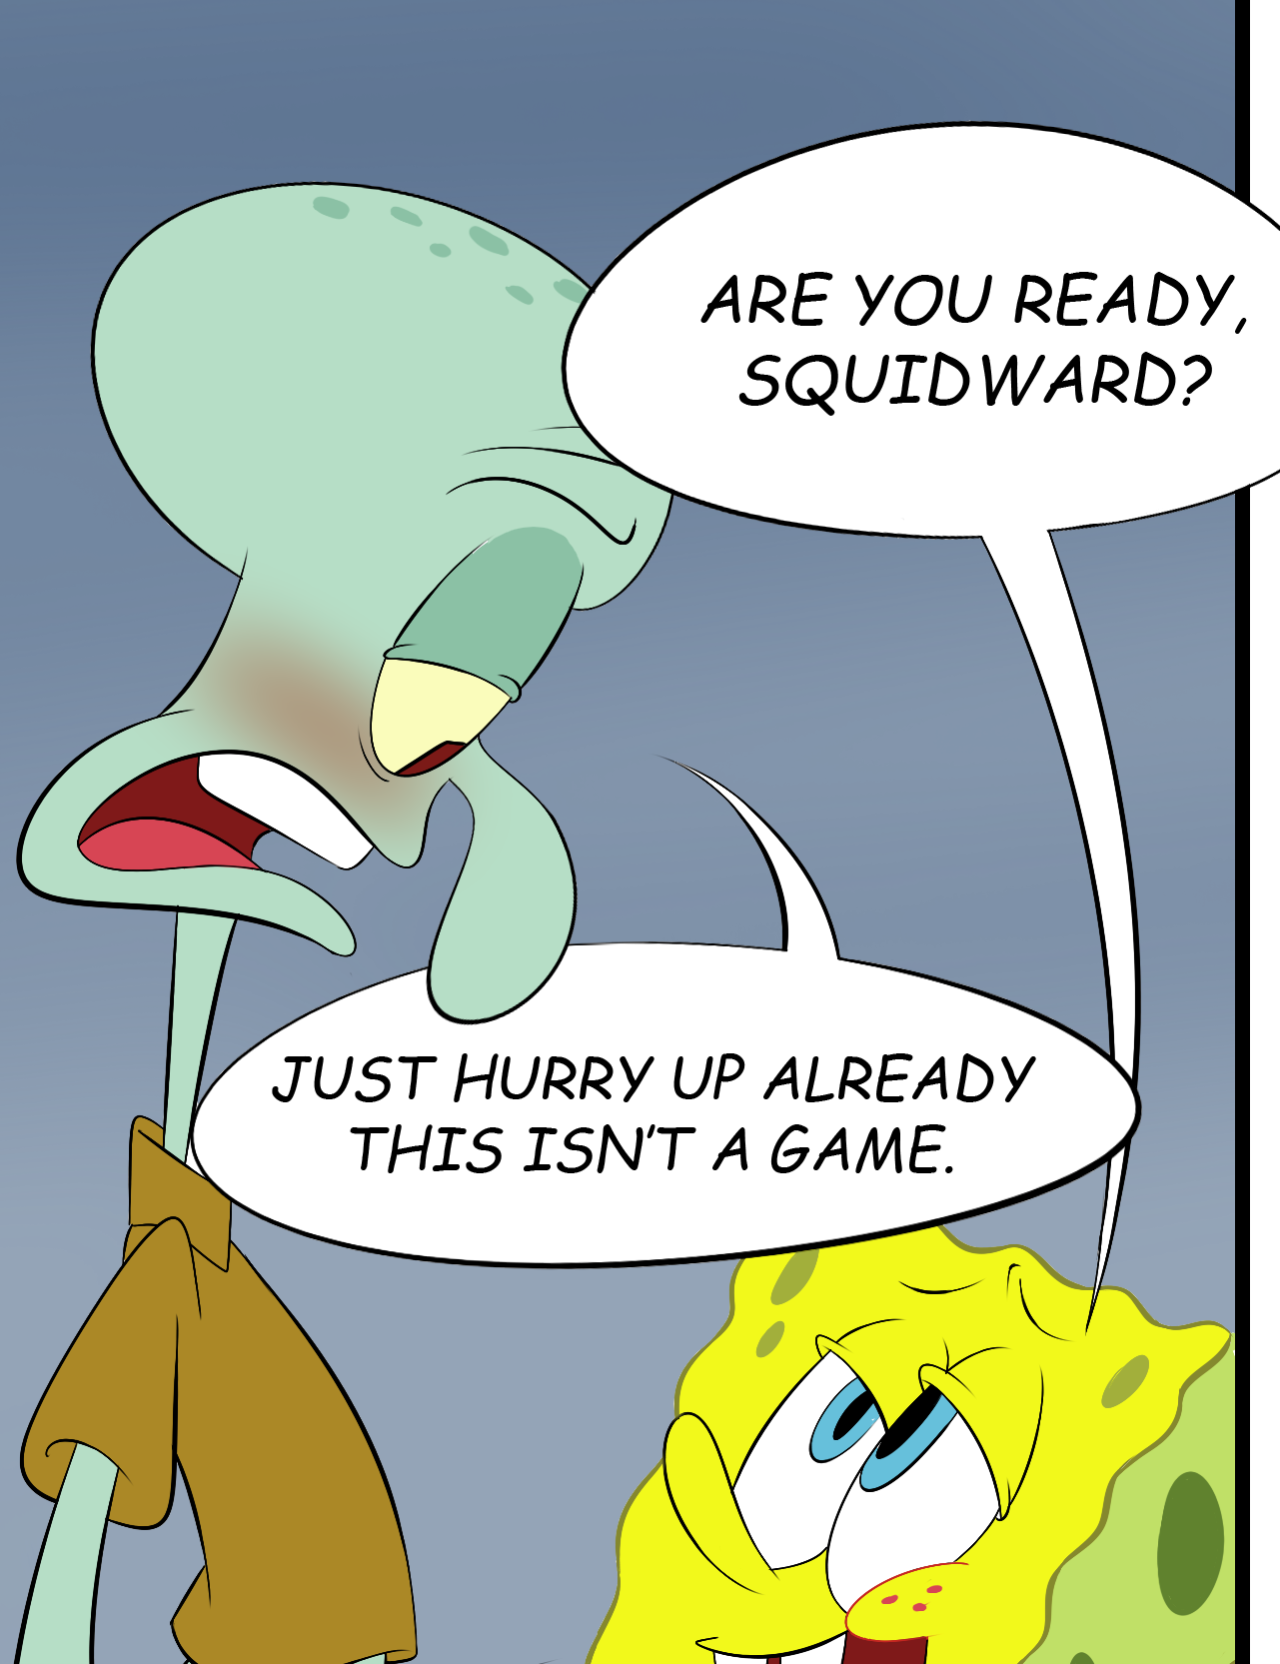 2016 New Cartoon Porn Spongebob - Squidbob â€” Page 2 of â€œBlowing the Jobâ€ â€¦.(NSFW!!!) â€¦ View on...